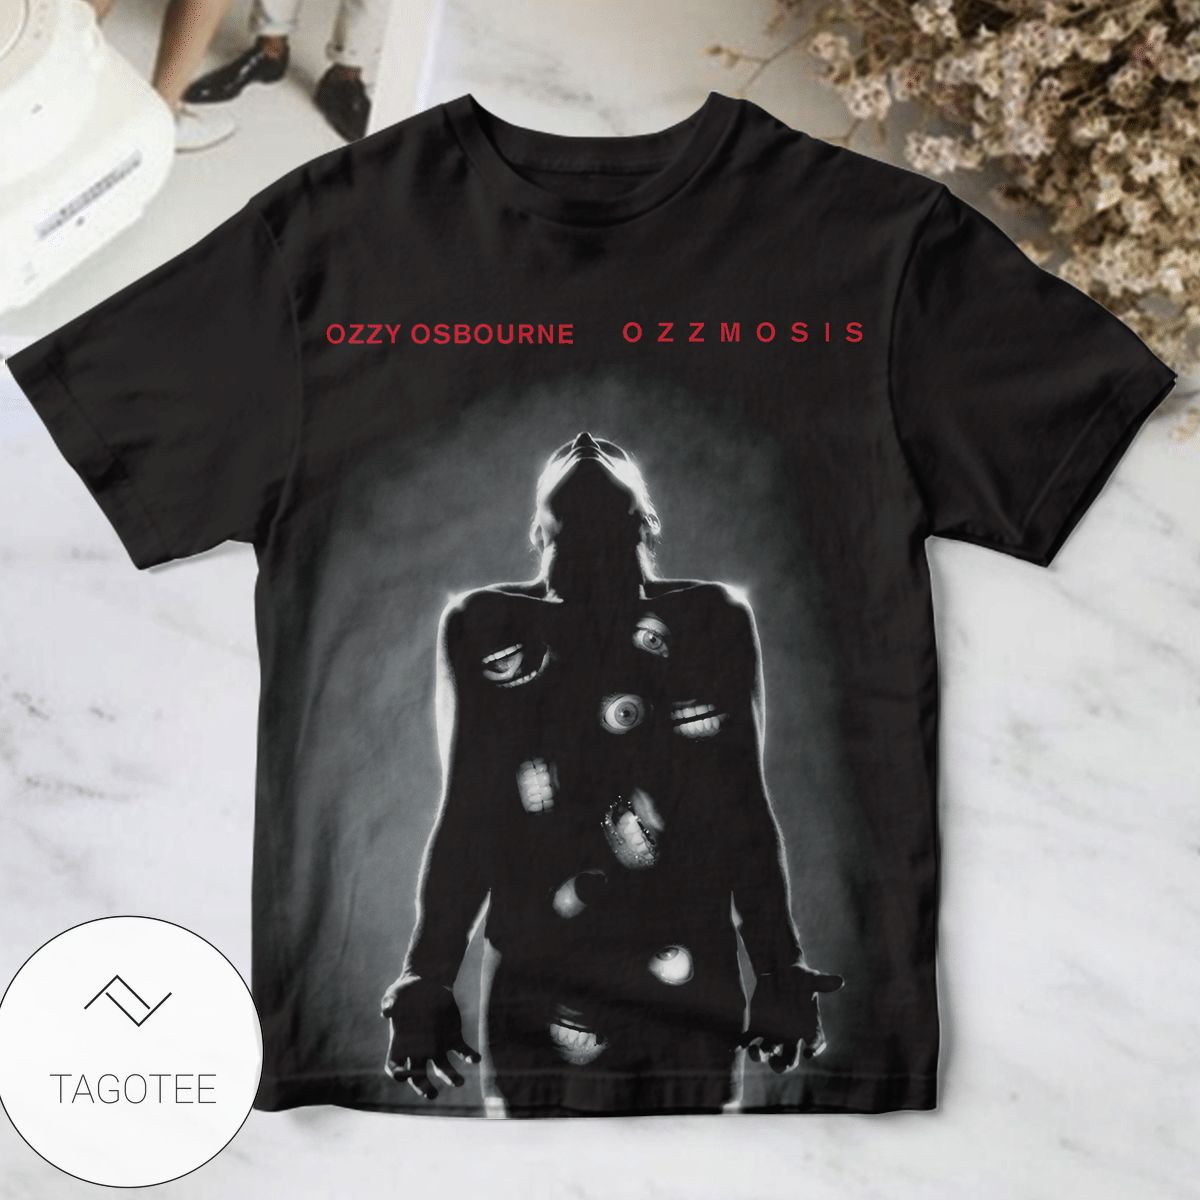 Ozzy Osbourne Ozzmosis Album Cover Shirt